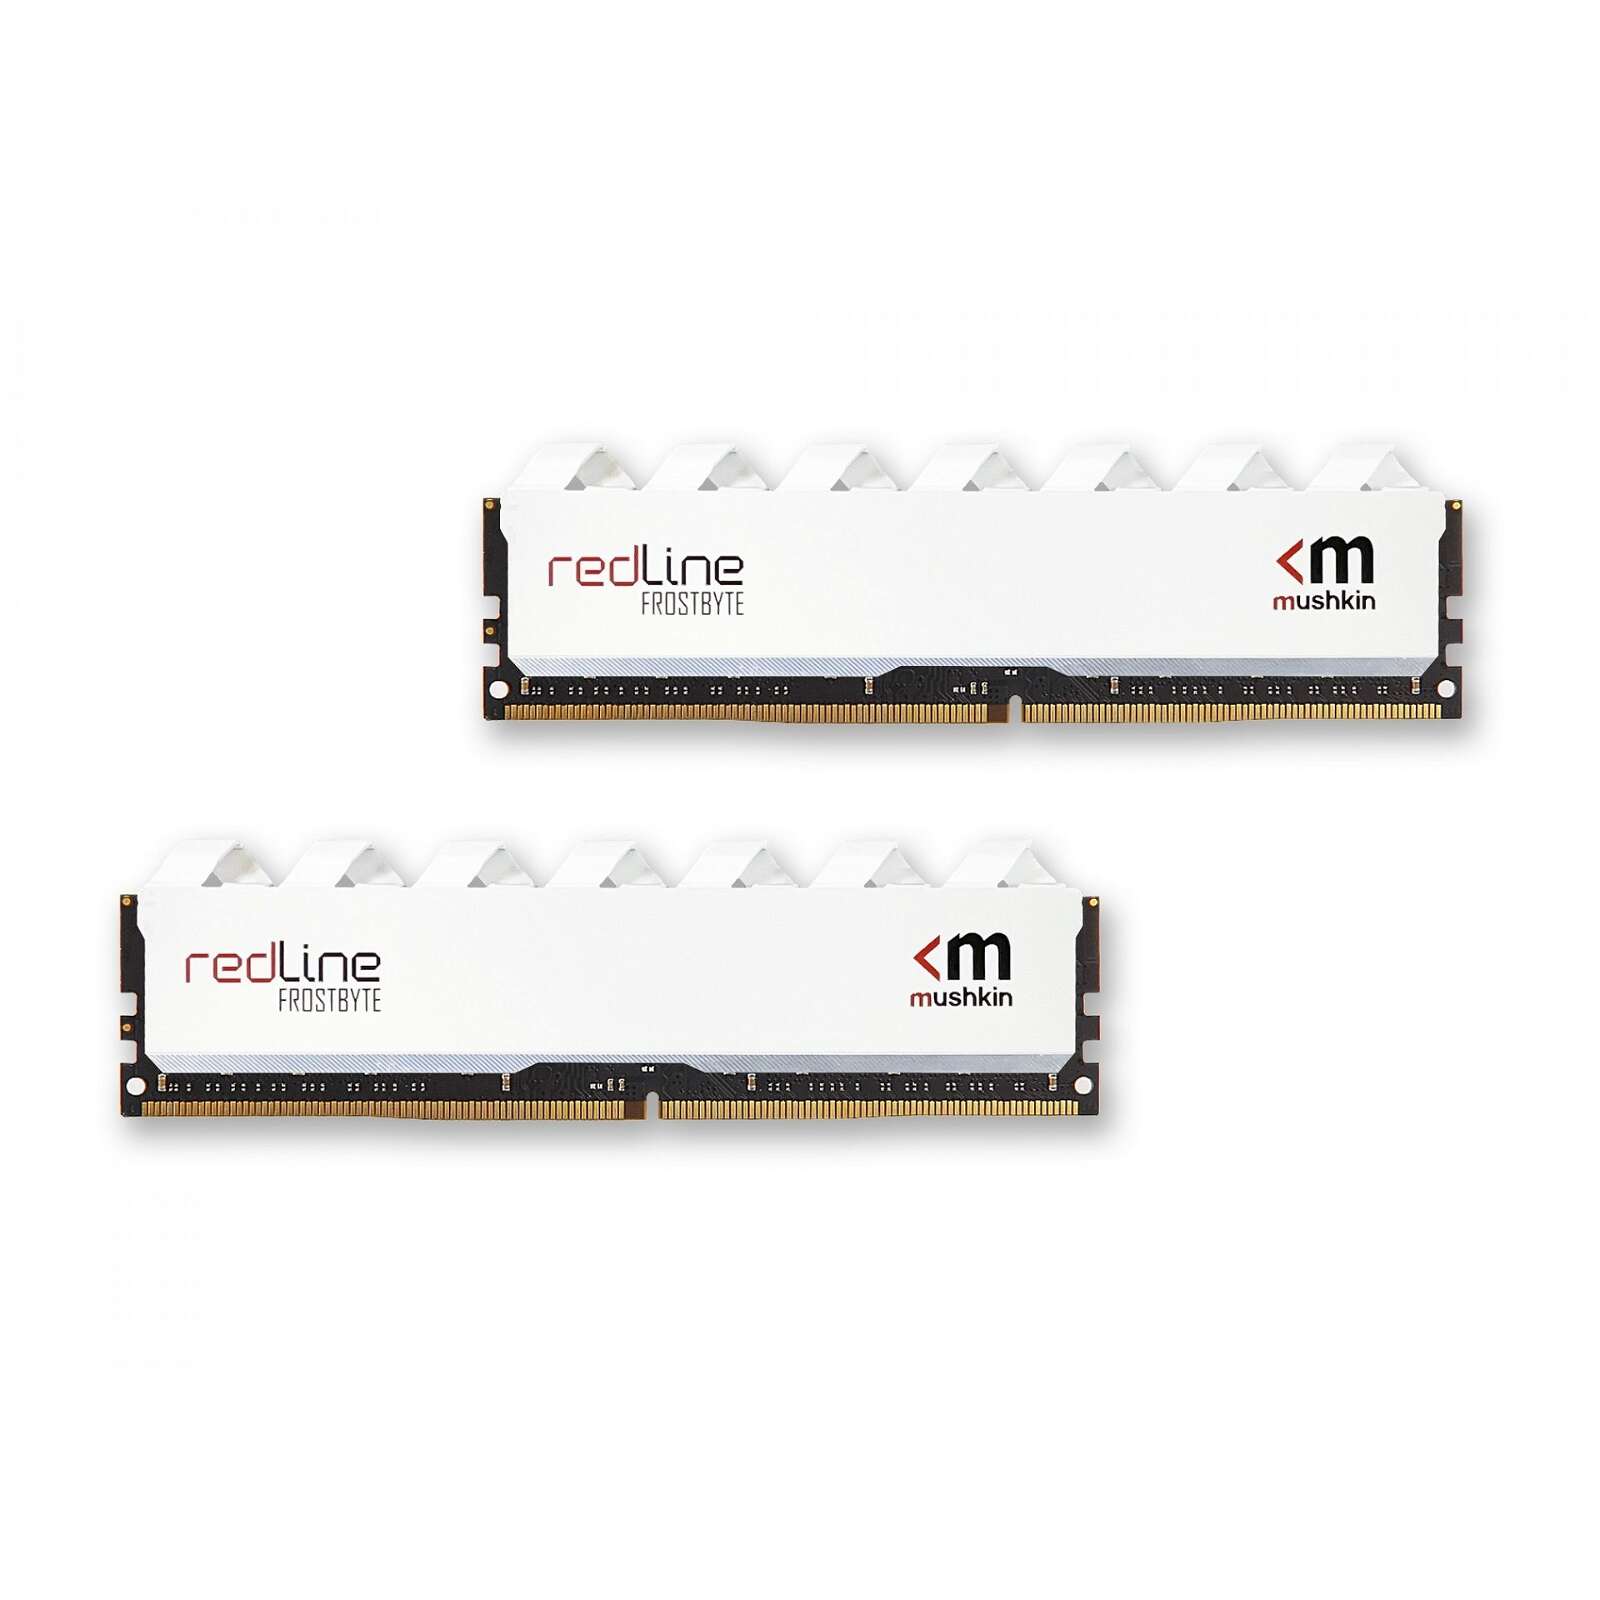 Mushkin 64gb / 3200 redline white ddr4 ram kit (2x32gb) (mrd4u320ejjp32gx2)